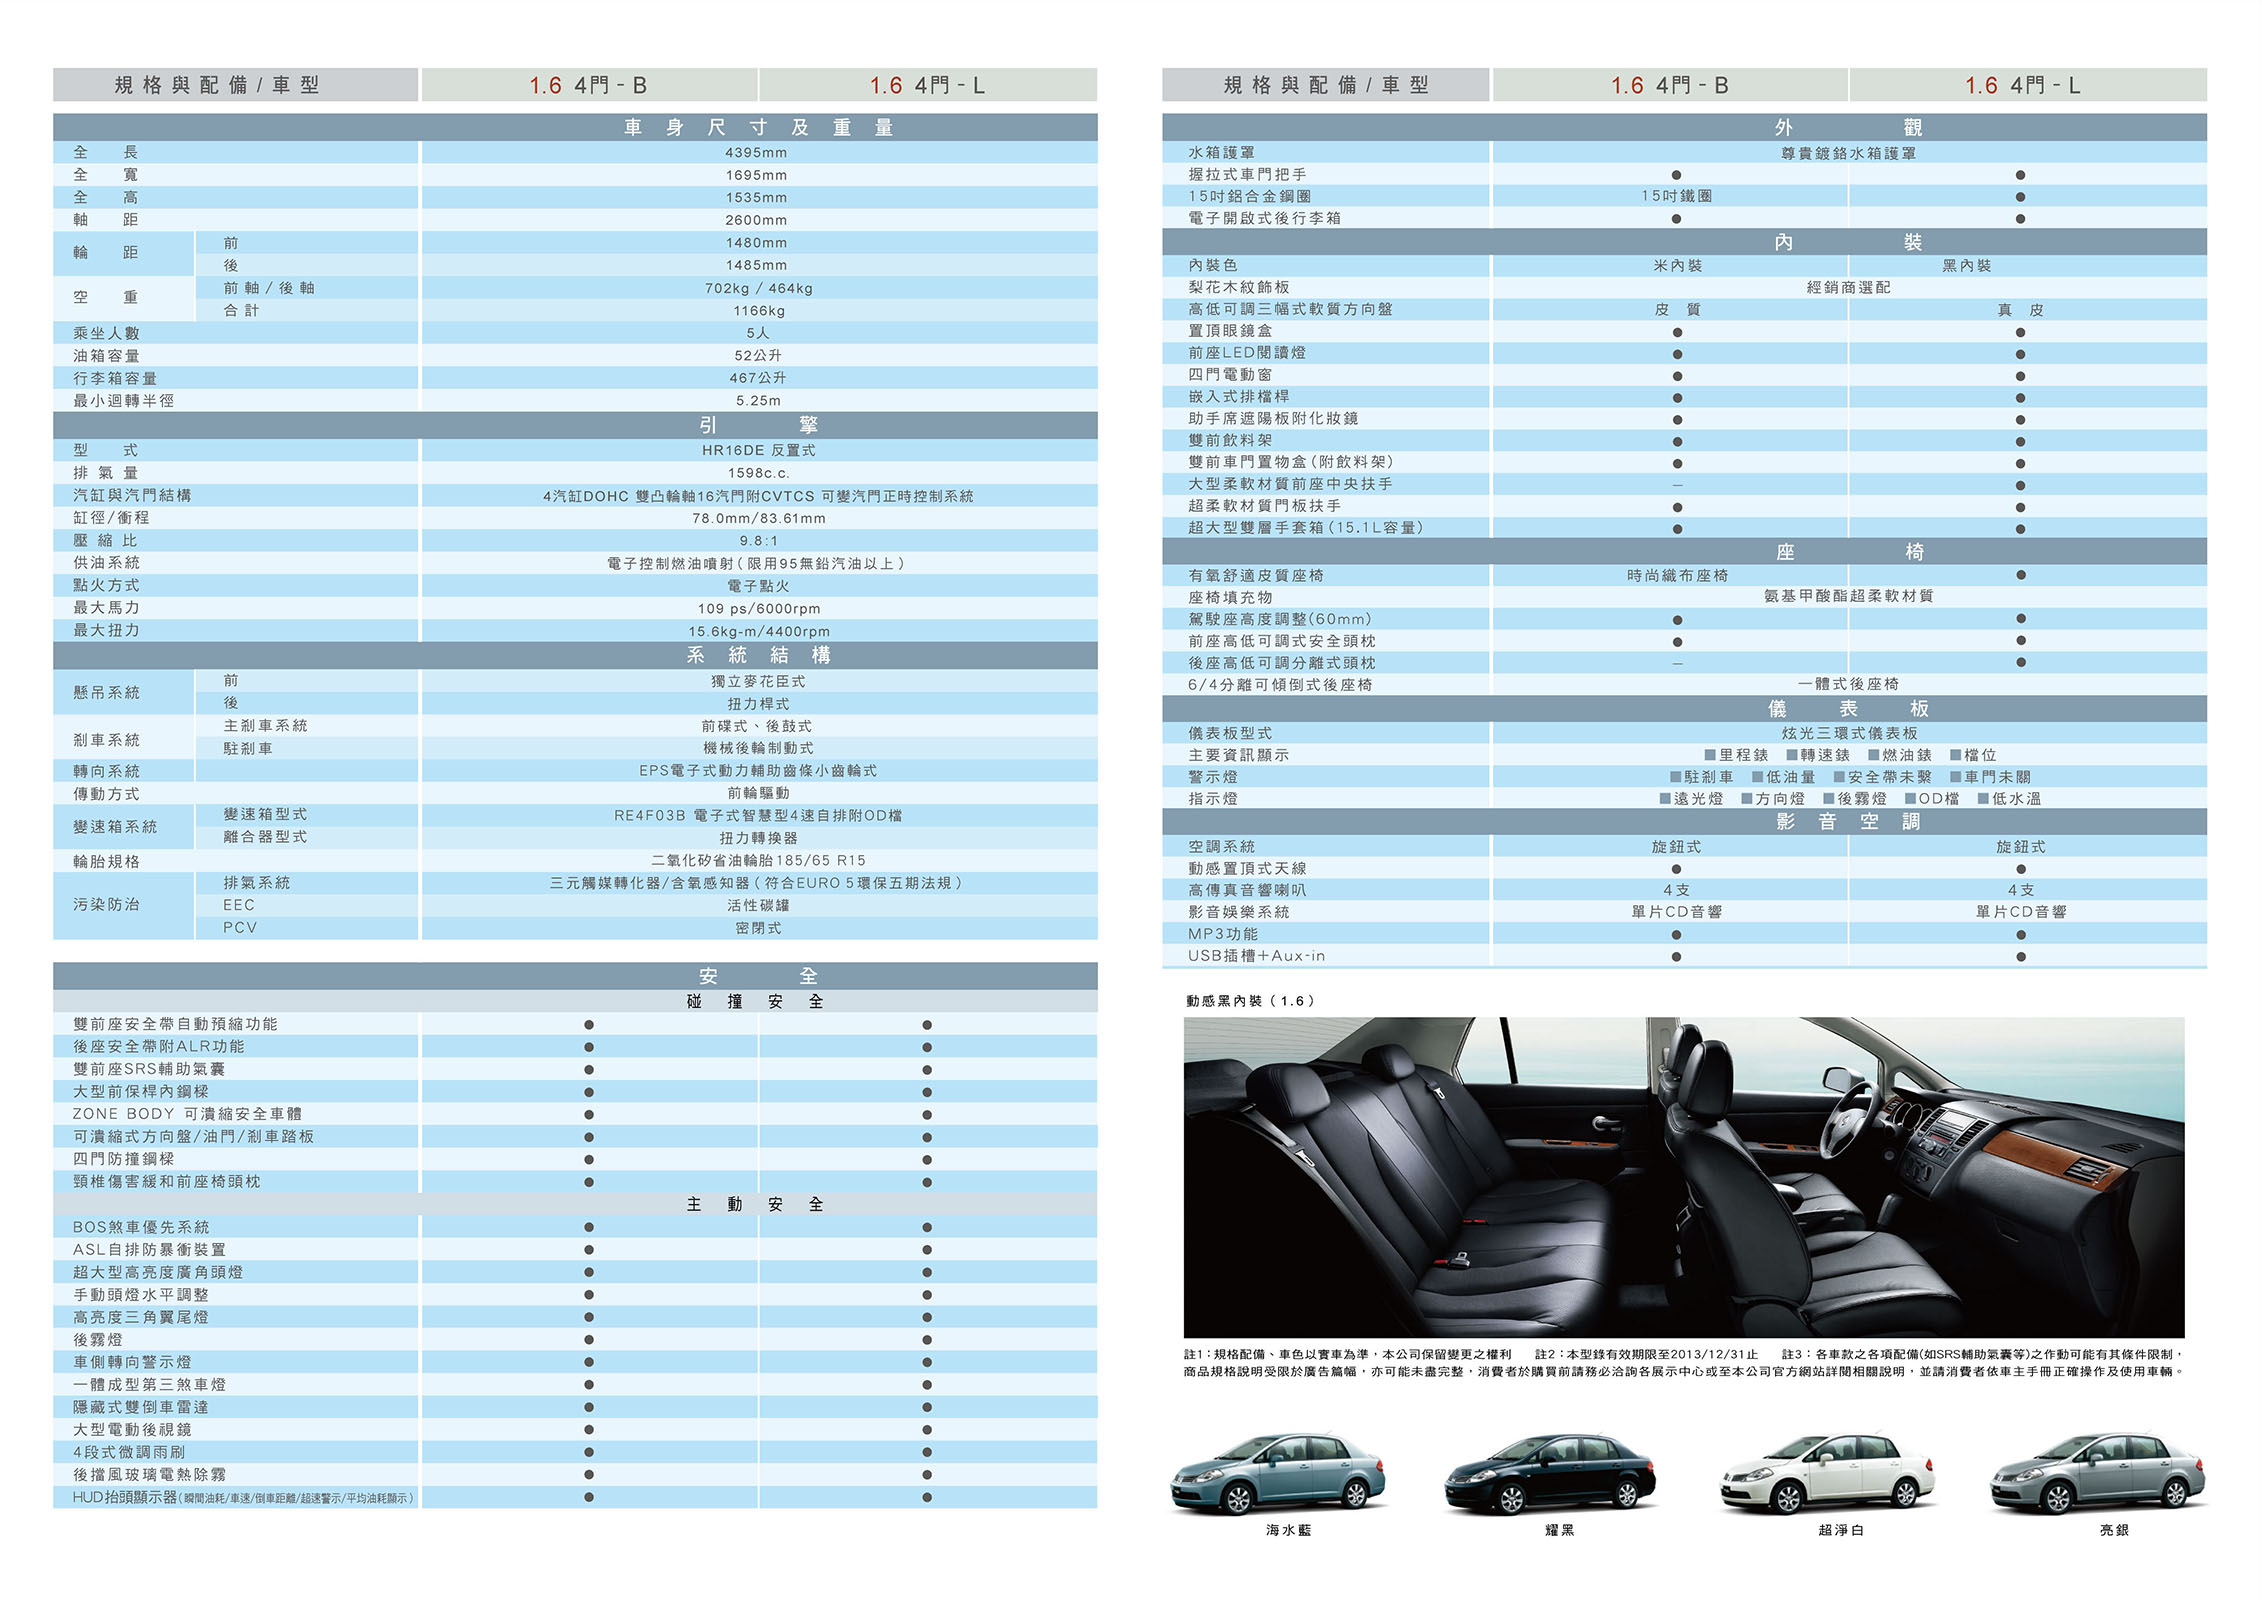 2014 Nissan Tiida 4d 1 6 B 汽車資料 Wewanted 購車好幫手